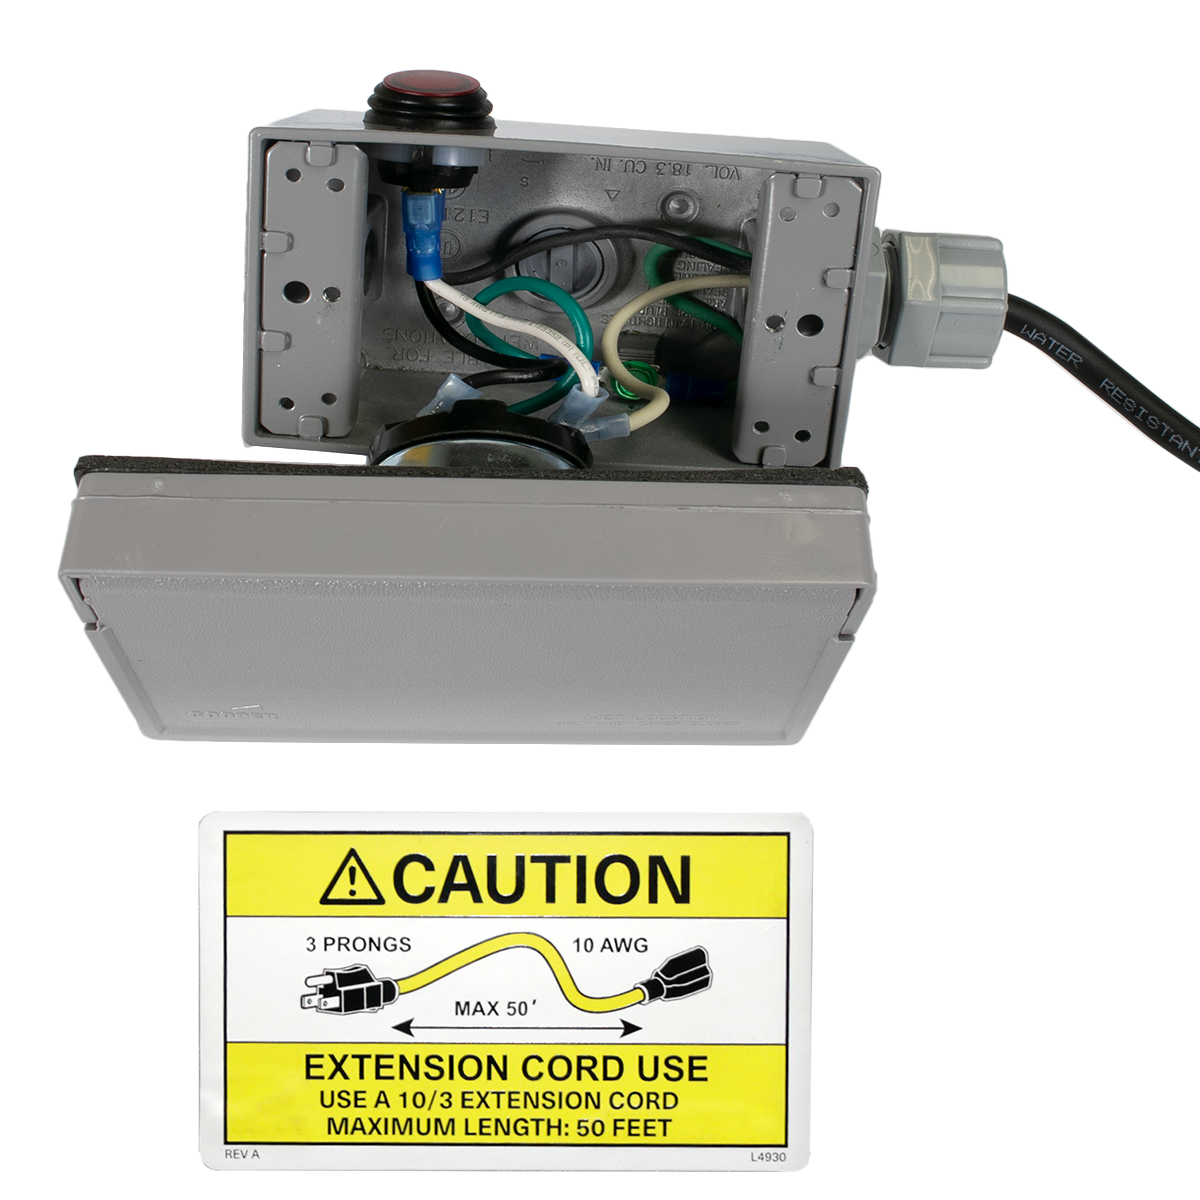 12V electrical box stock image